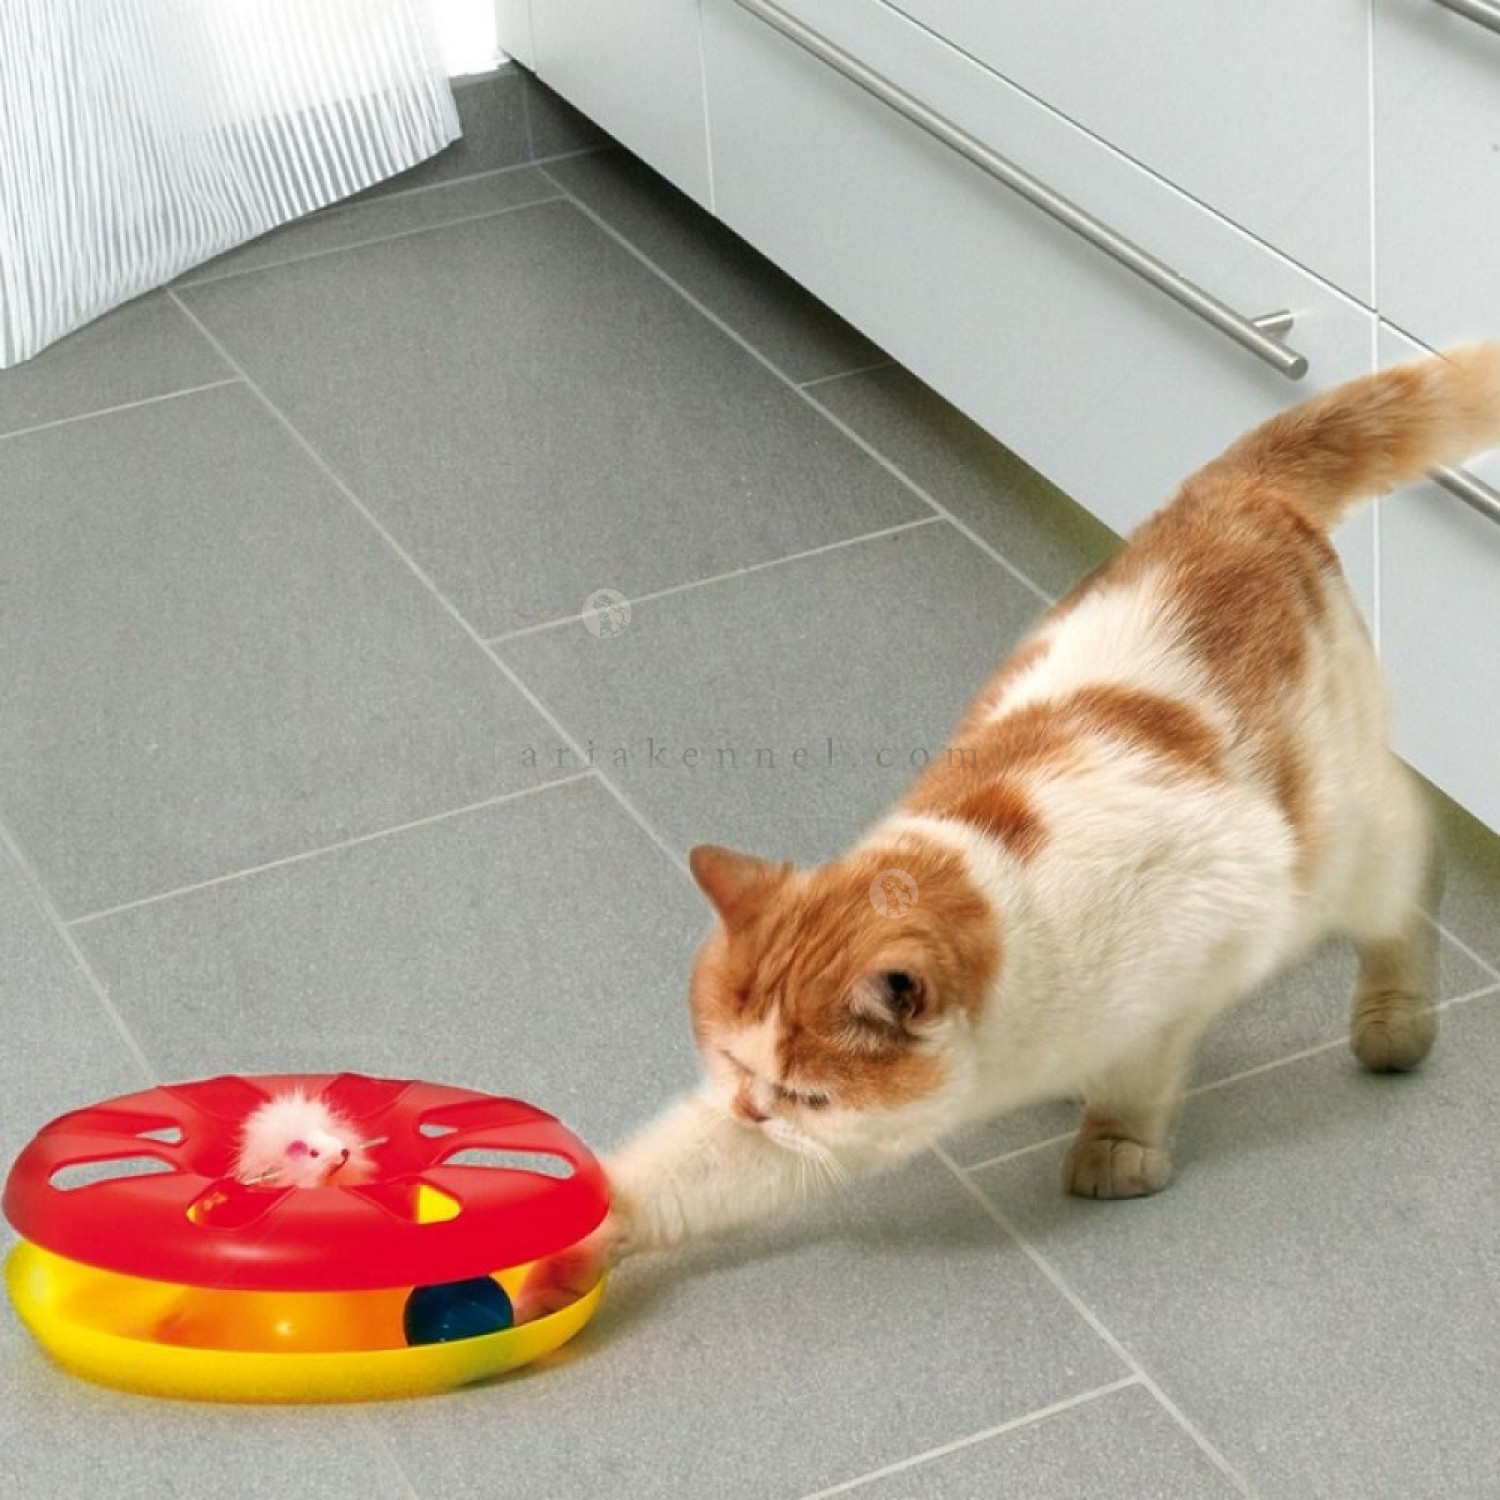 Играчка Кръг с мишка и топче, KARLIE, жълта с червено